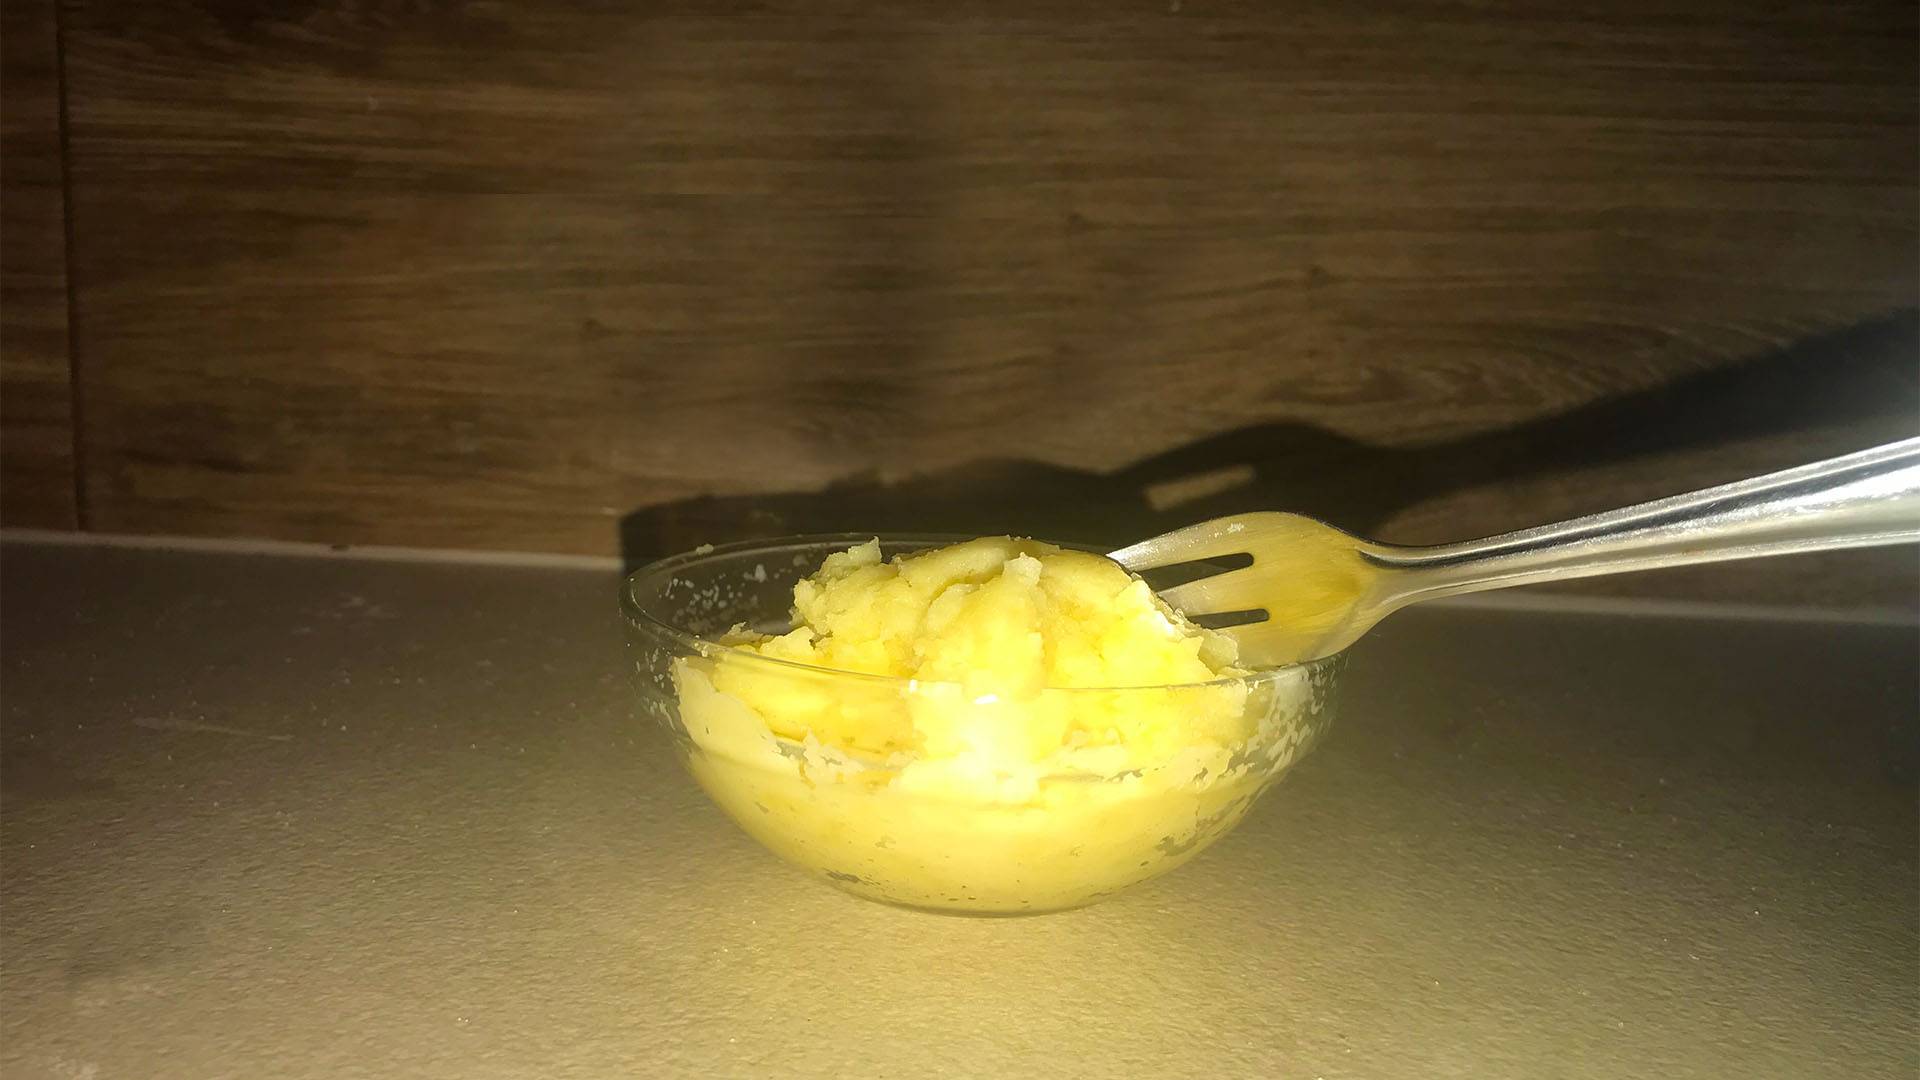 Krumplipüré (főtt krumpli) mikróban – Mikrós főtt krumpli, krumplipüré recept